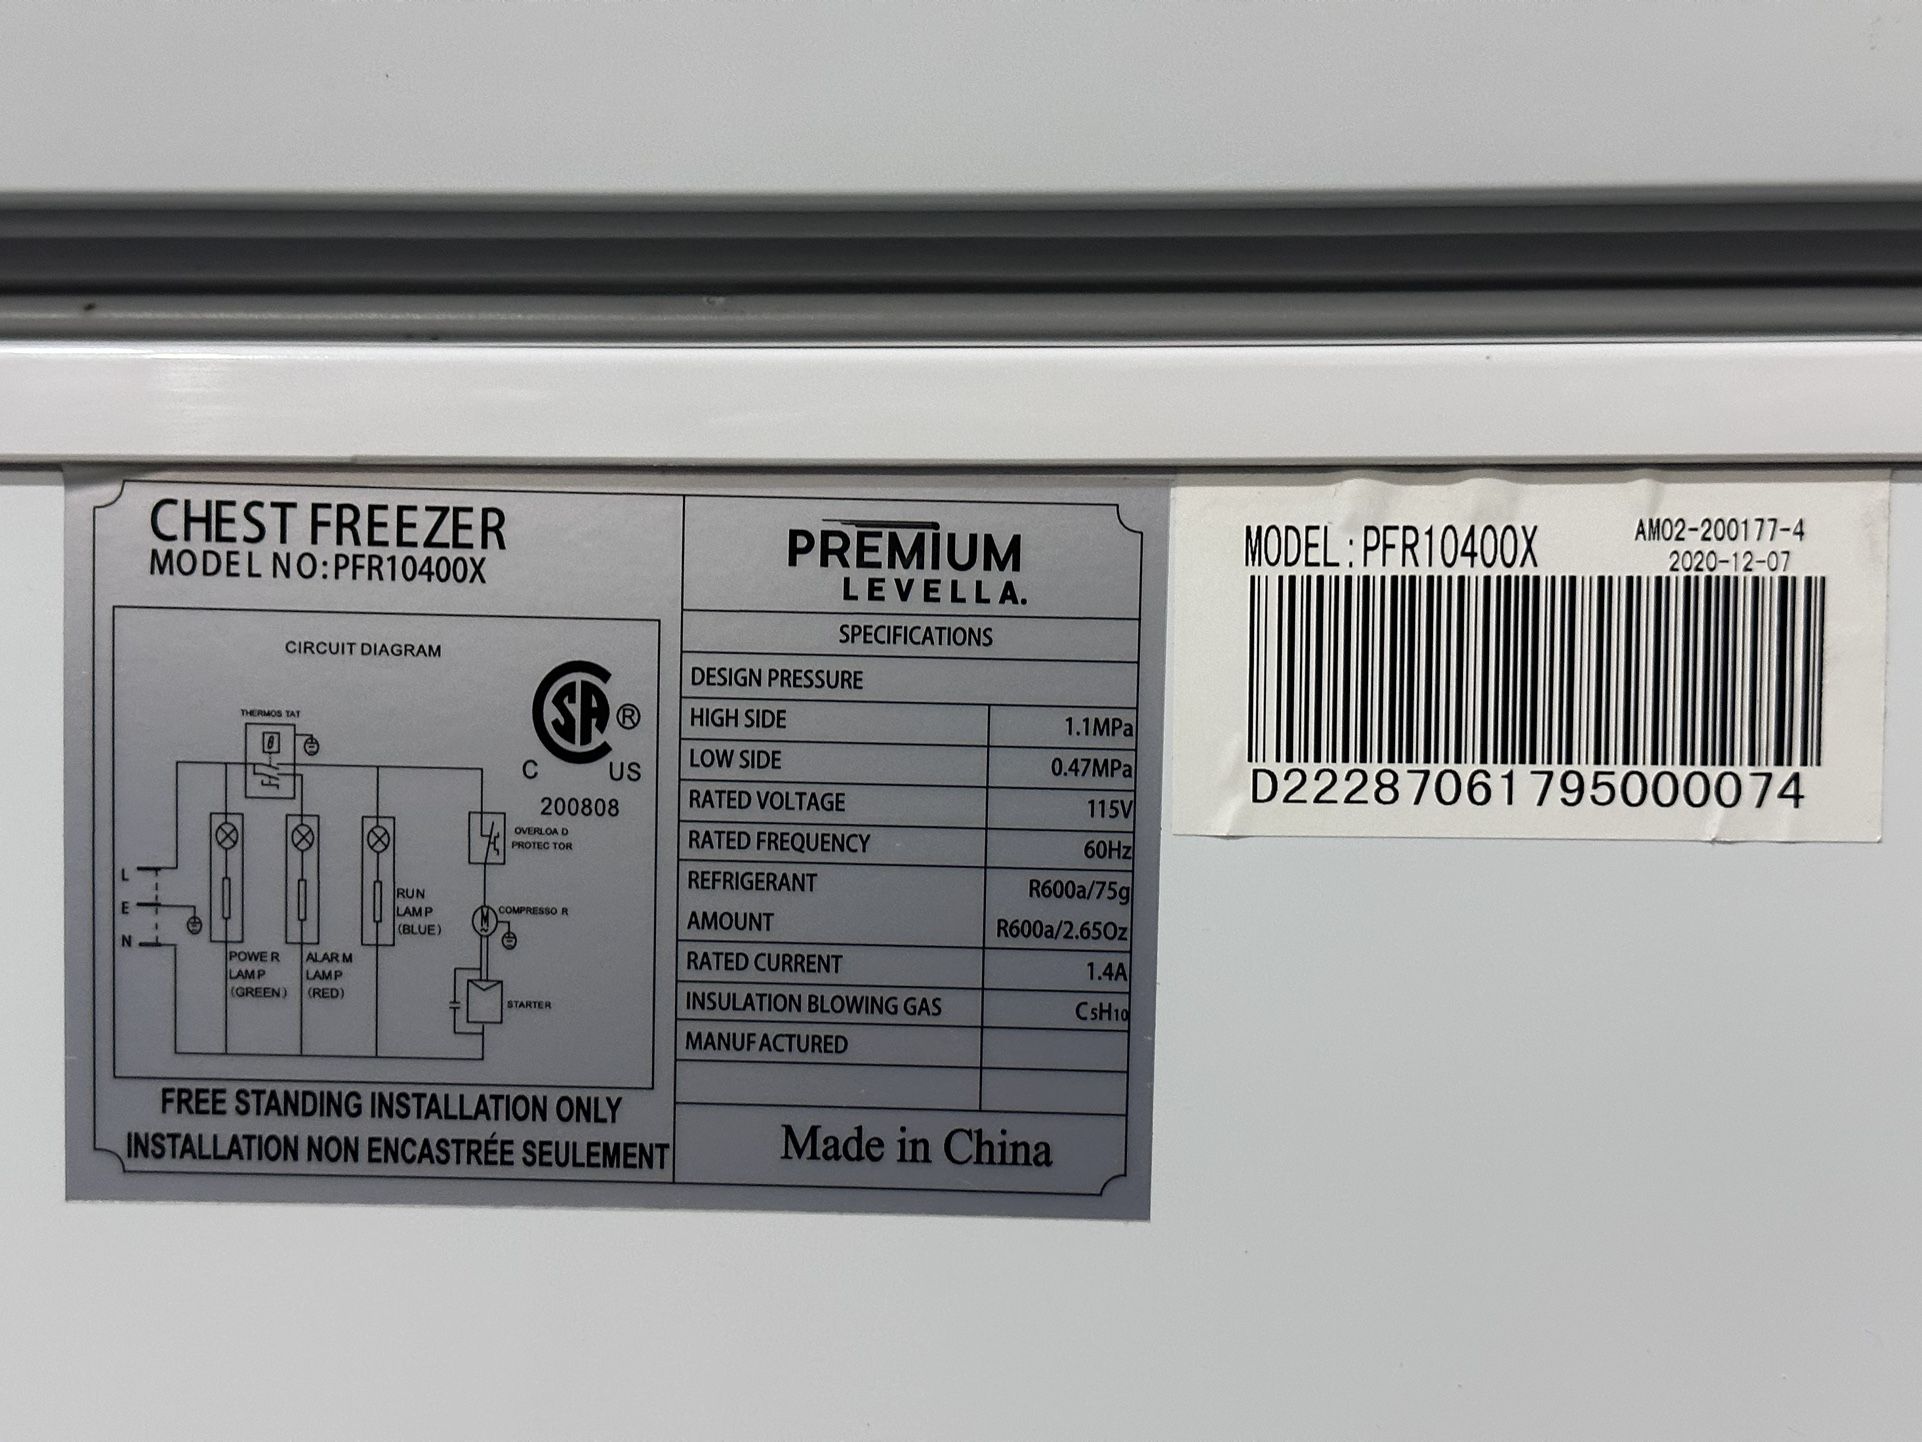 Premium Levella PFR10400X 10 Cu ft Chest Freezer in White